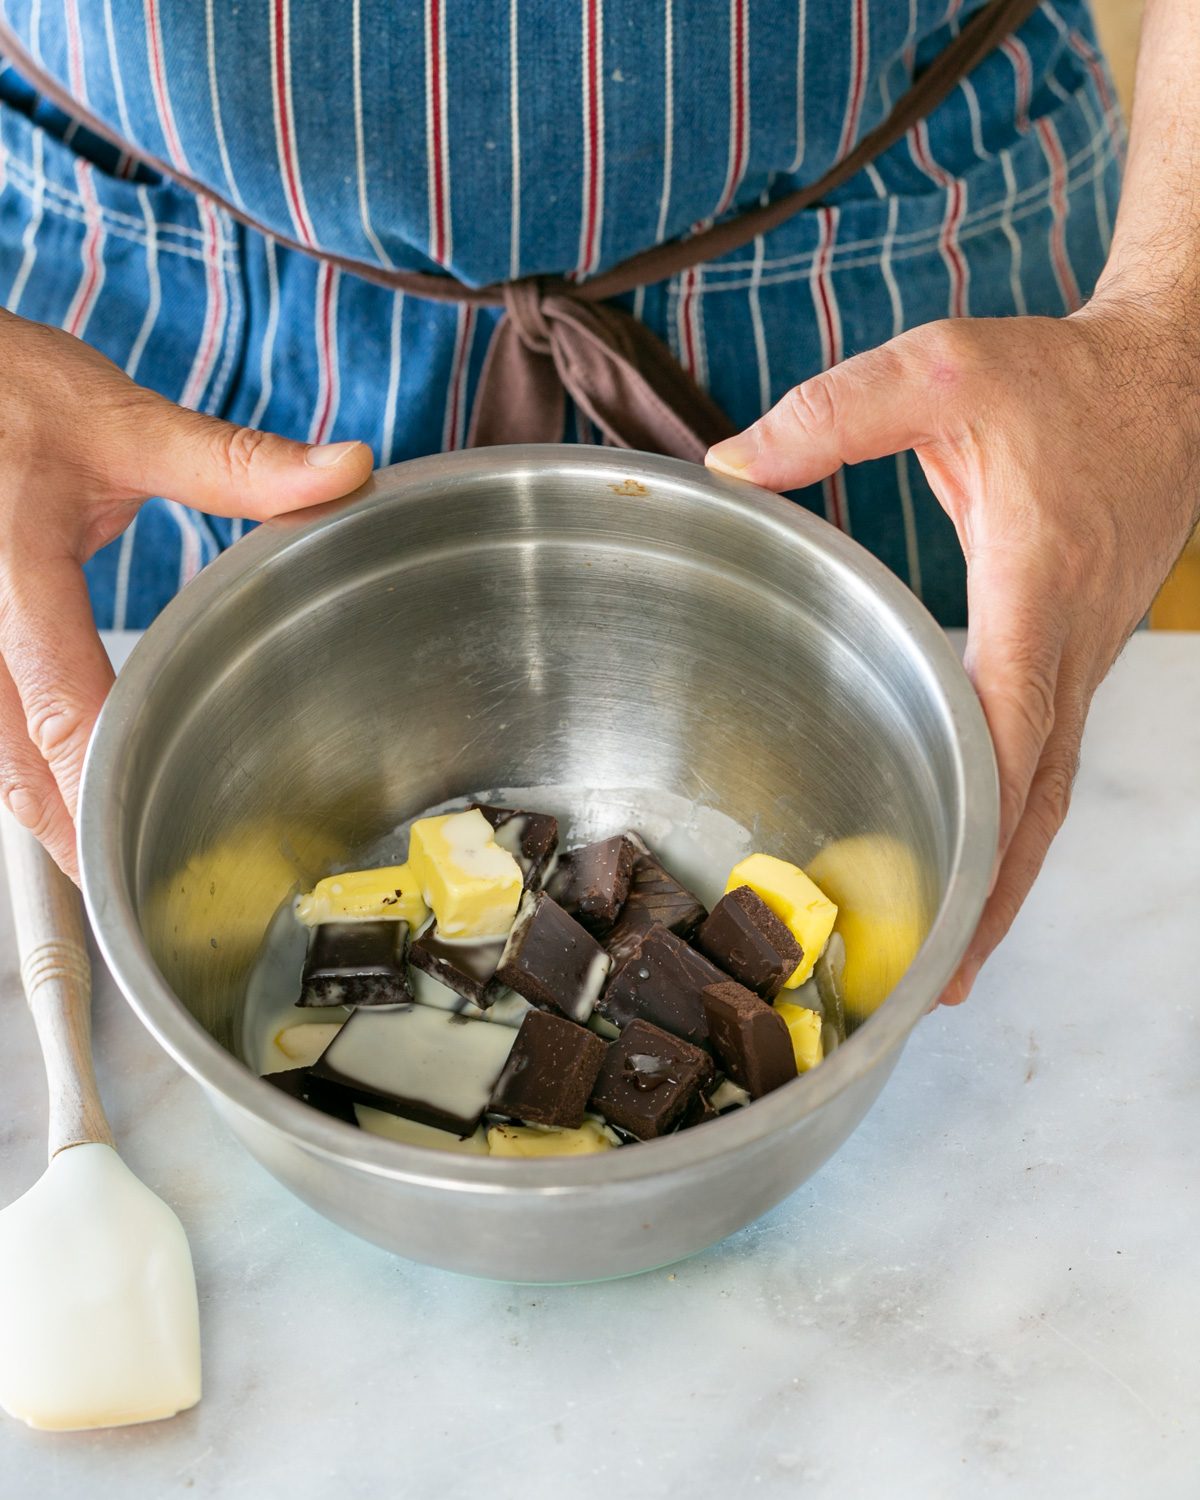 Ingredients to make the chocolate glaze